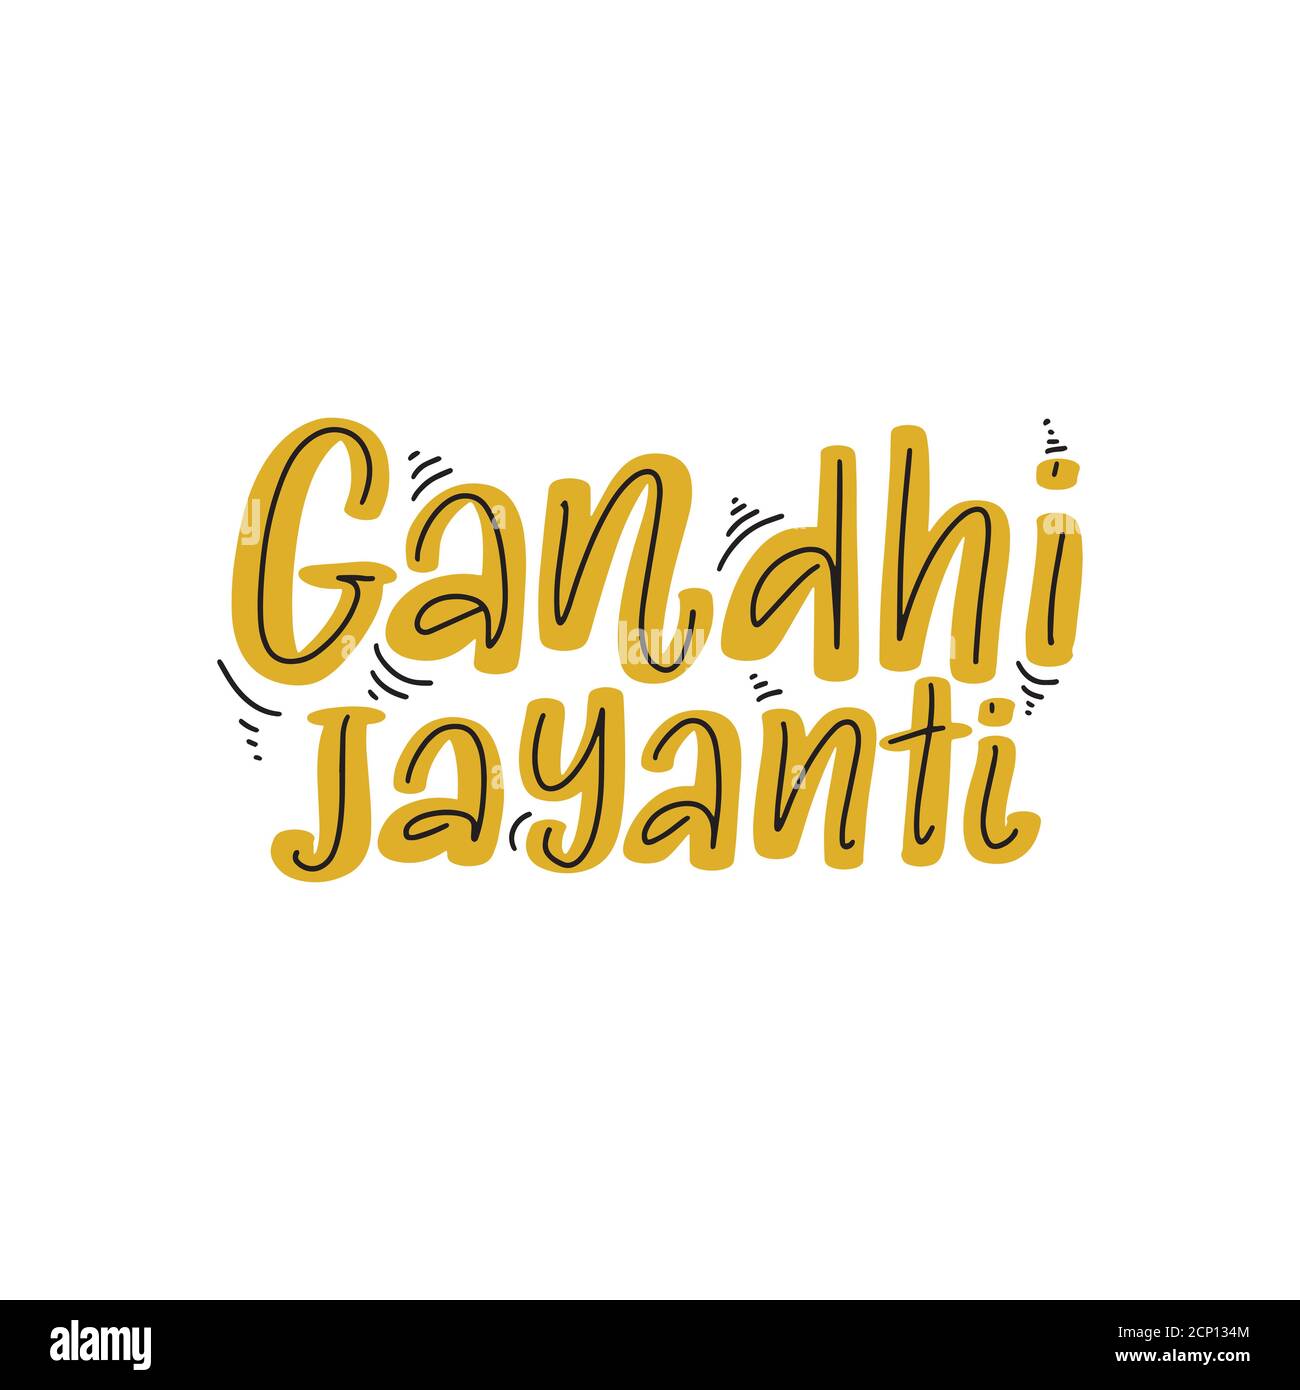 Lettering illustration with Gandhi Jayanti for concept design. Stock Vector